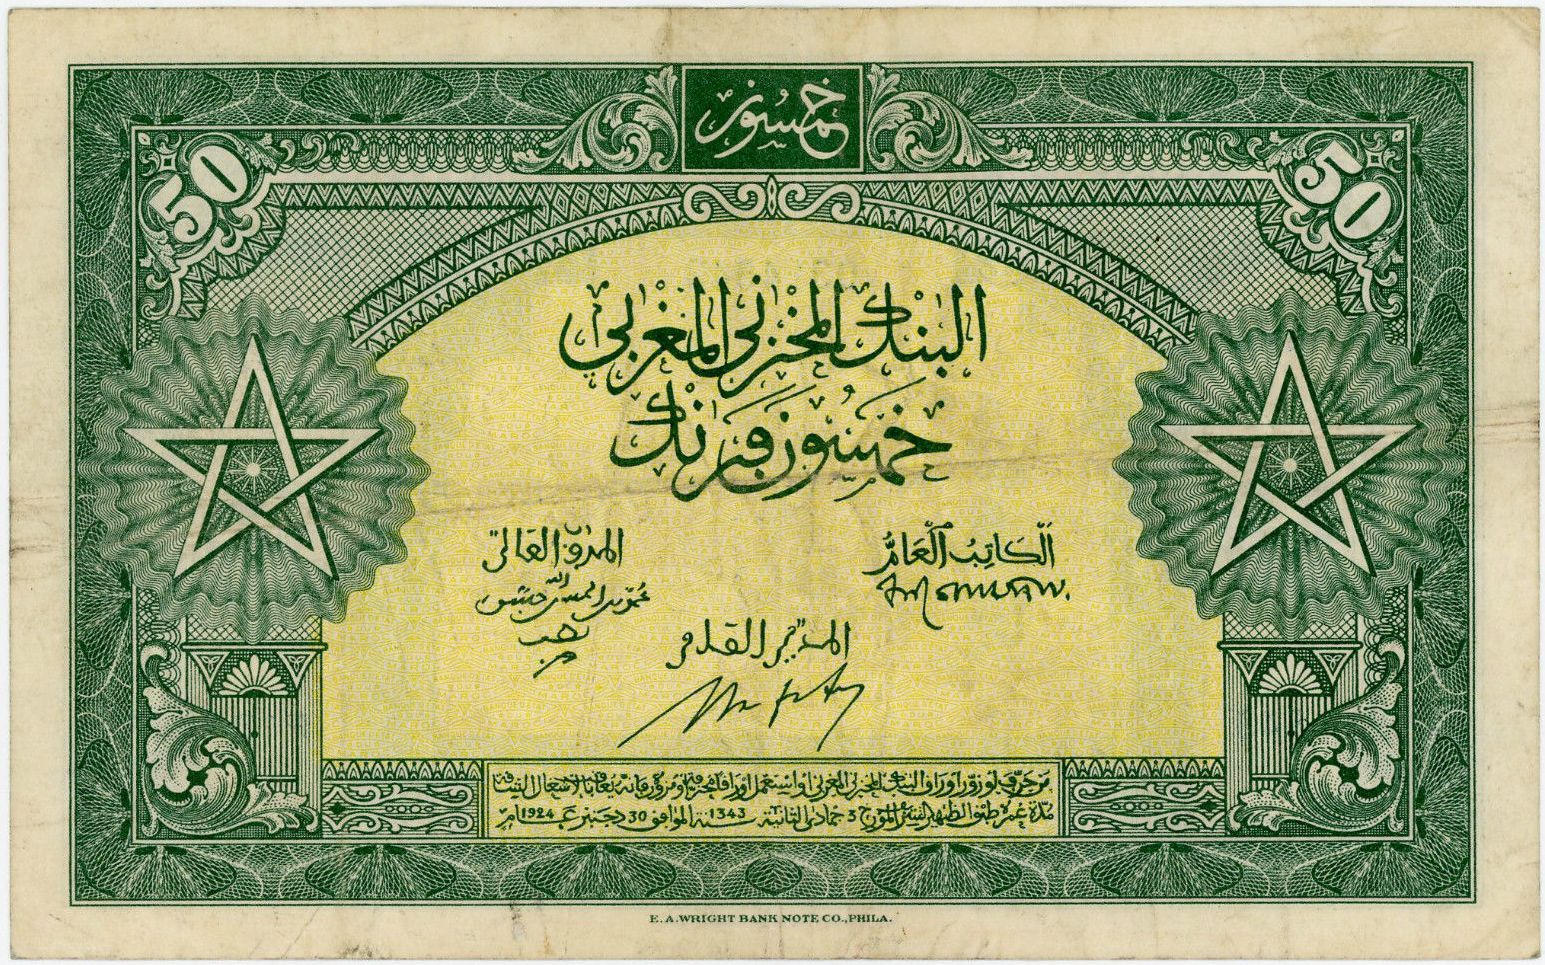 Maroc 50 francs back.jpg